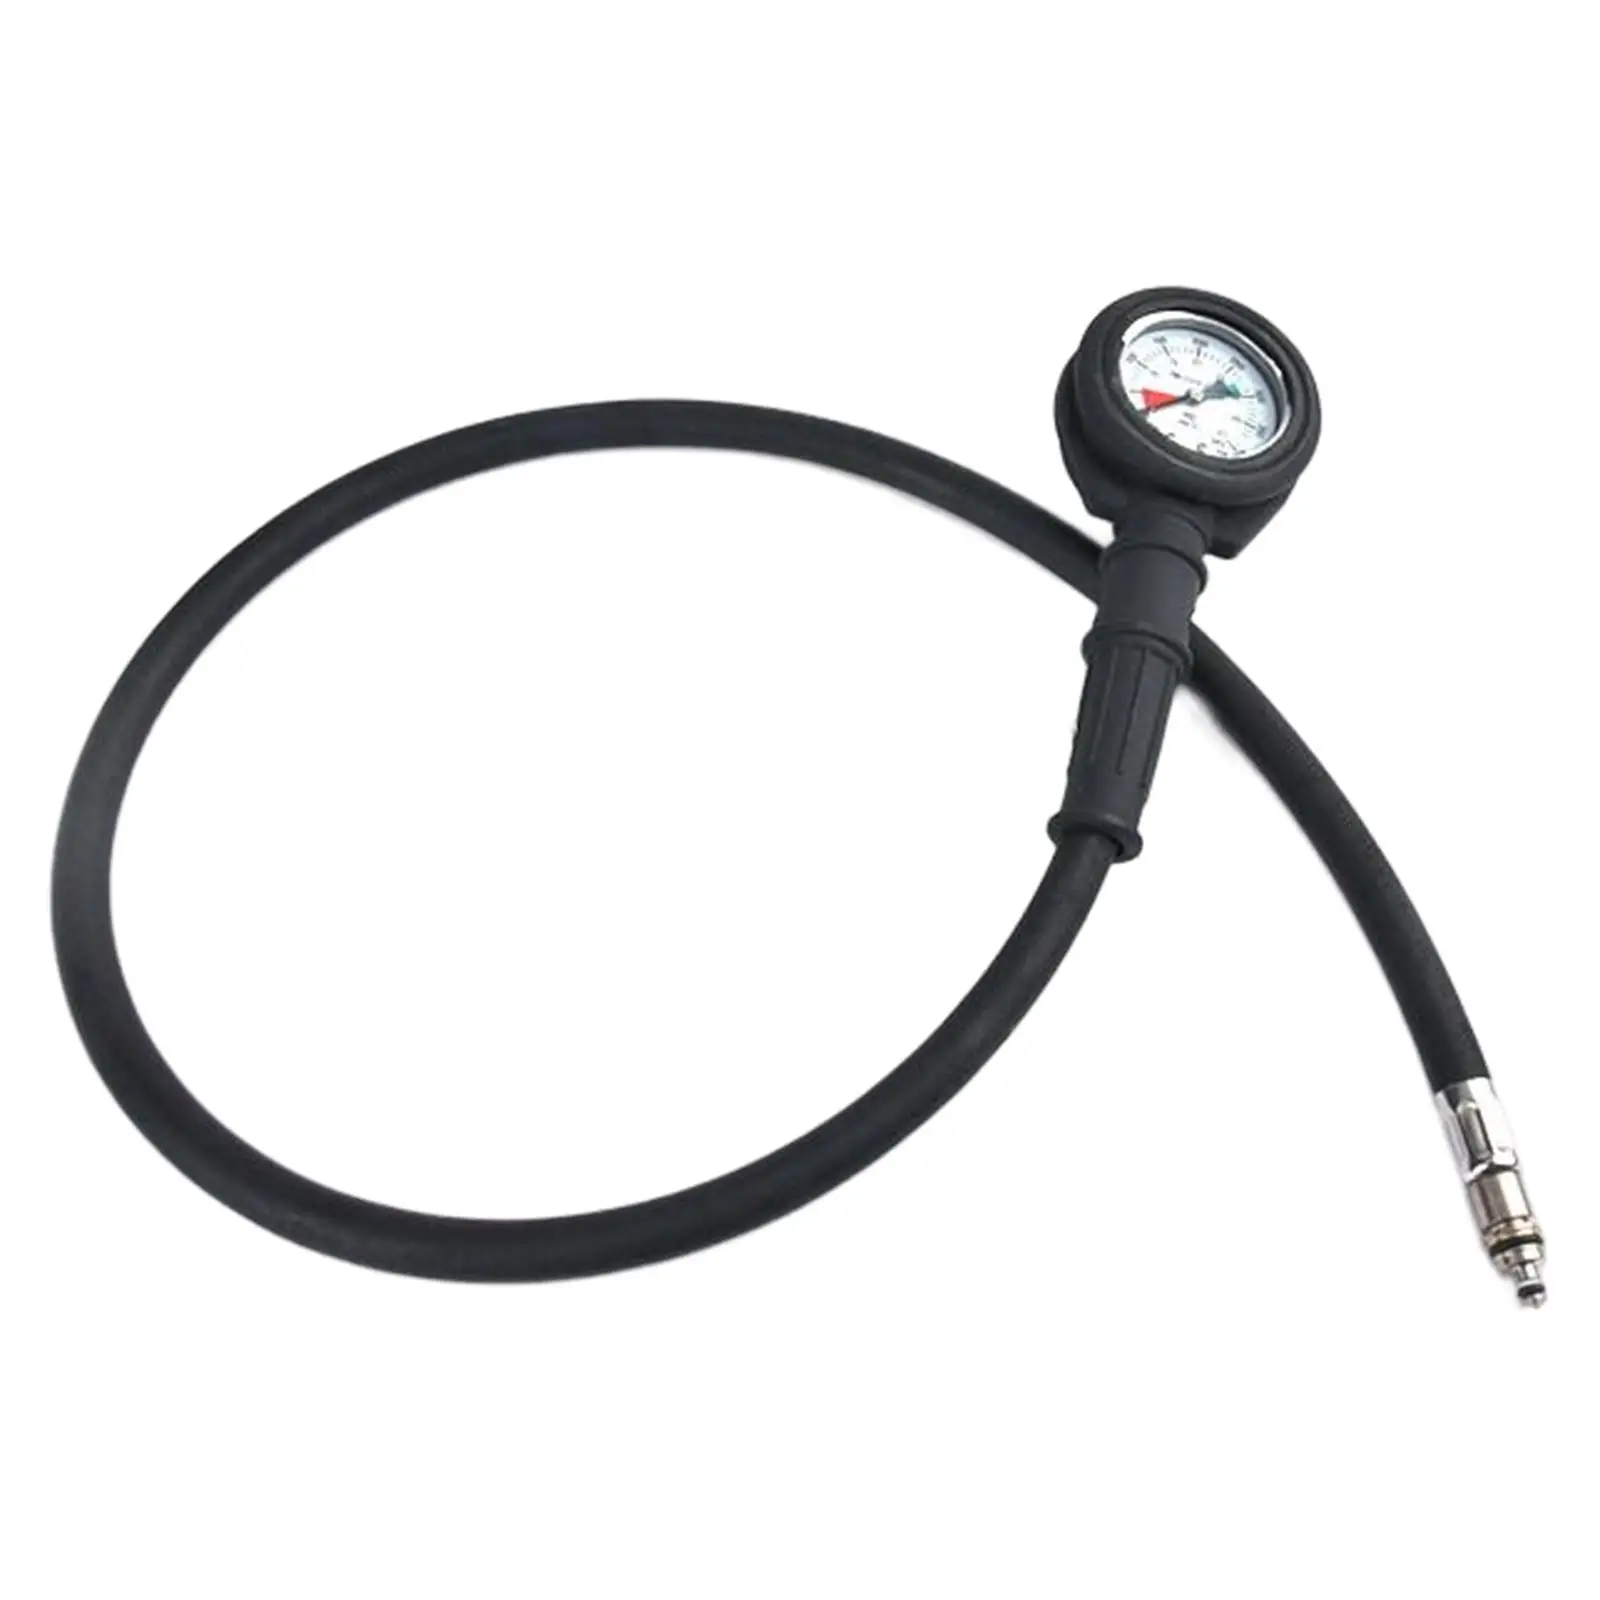 Compact Scuba Diving Pressure Gauge, Dial Scale 0-400 bar, Black, Standard